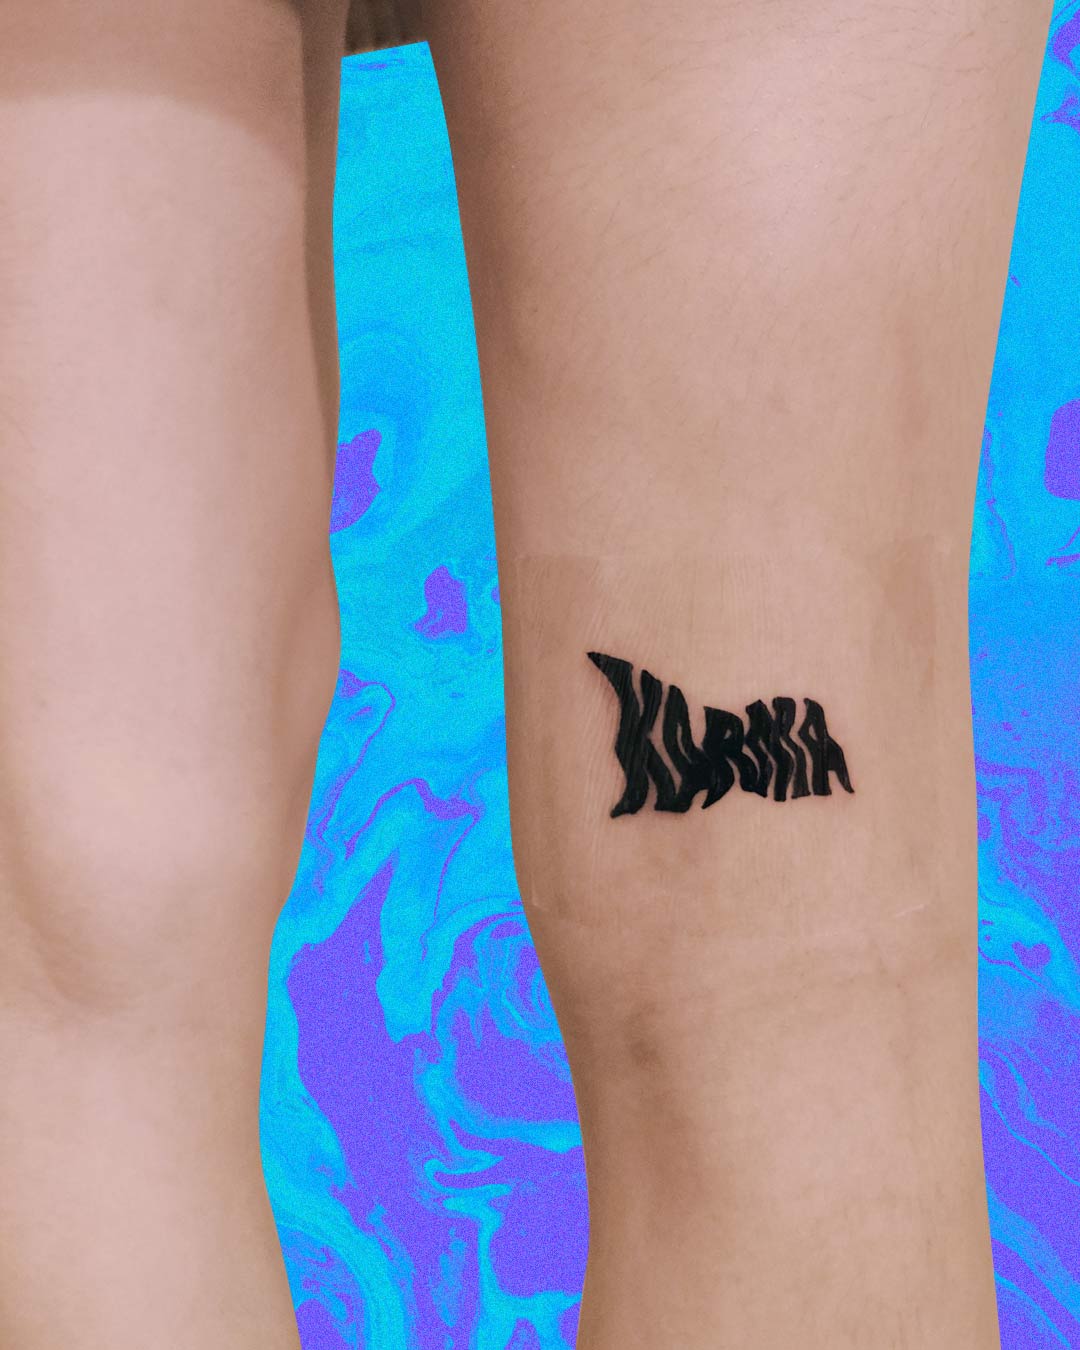 Tattoo - Karma